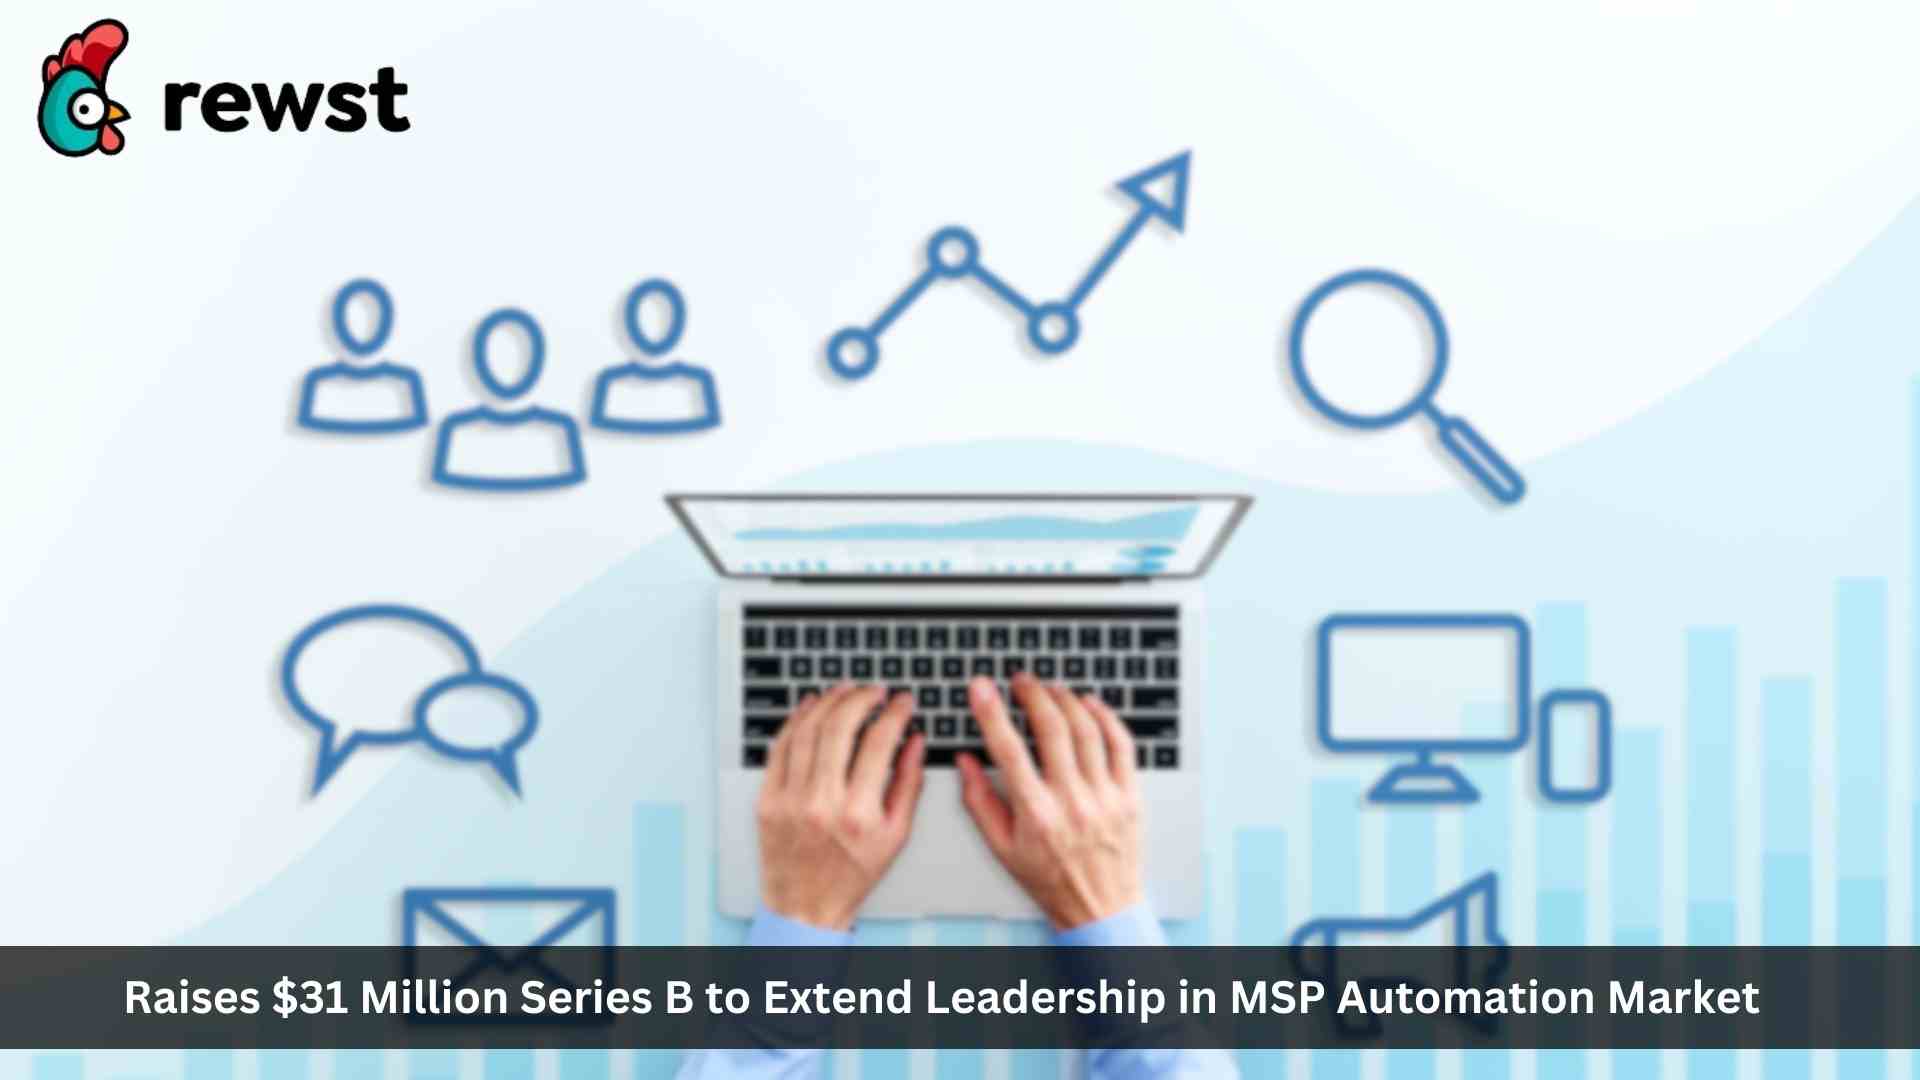 Rewst Raises $31 Million Series B to Extend Leadership in MSP Automation Market